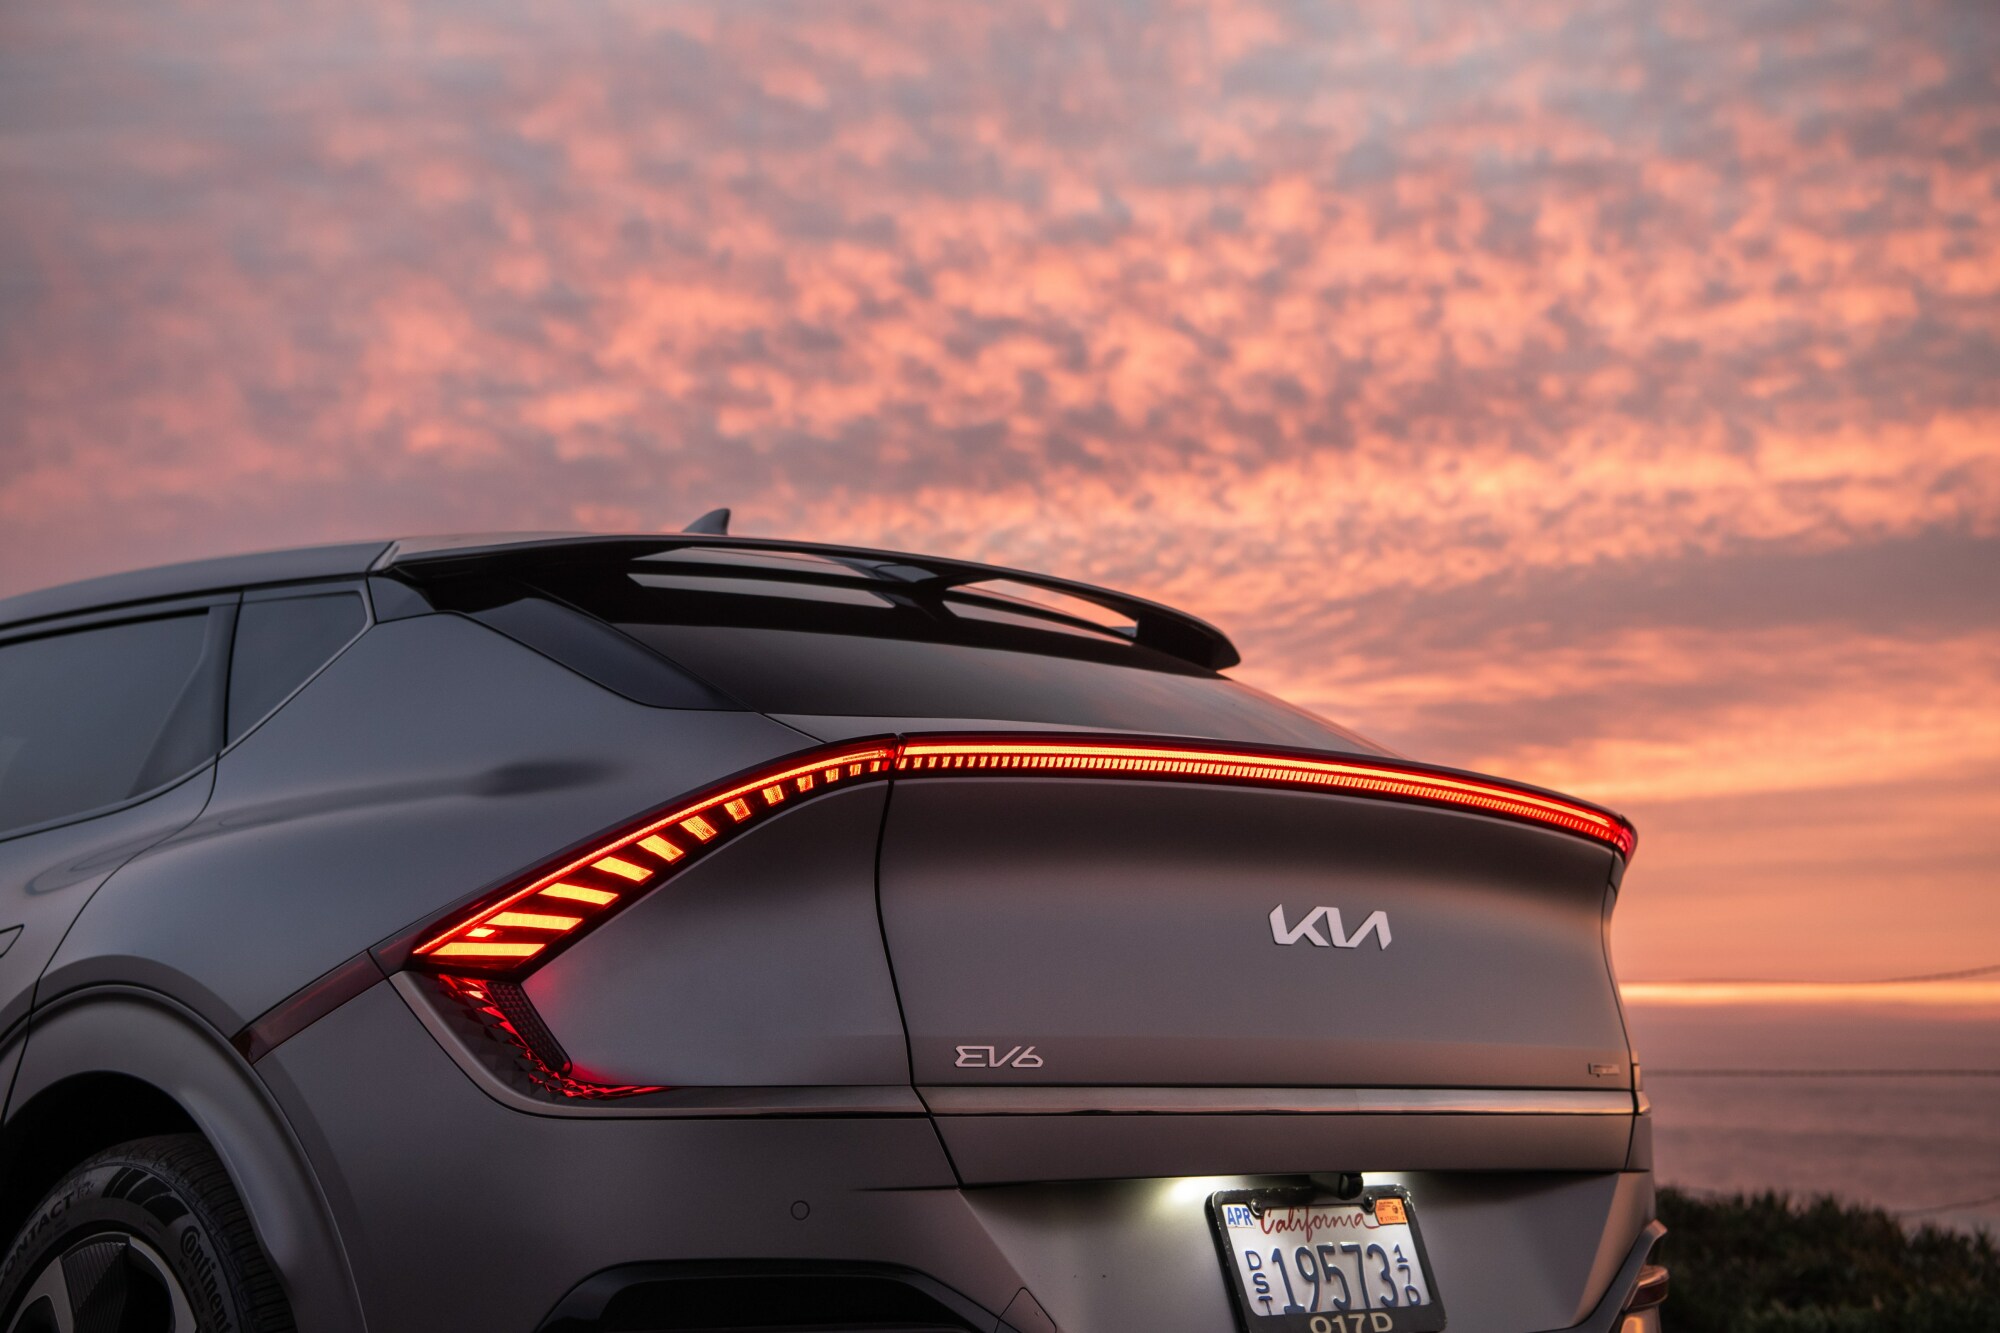 The back of the EV6 against a vibrant orange sunset.